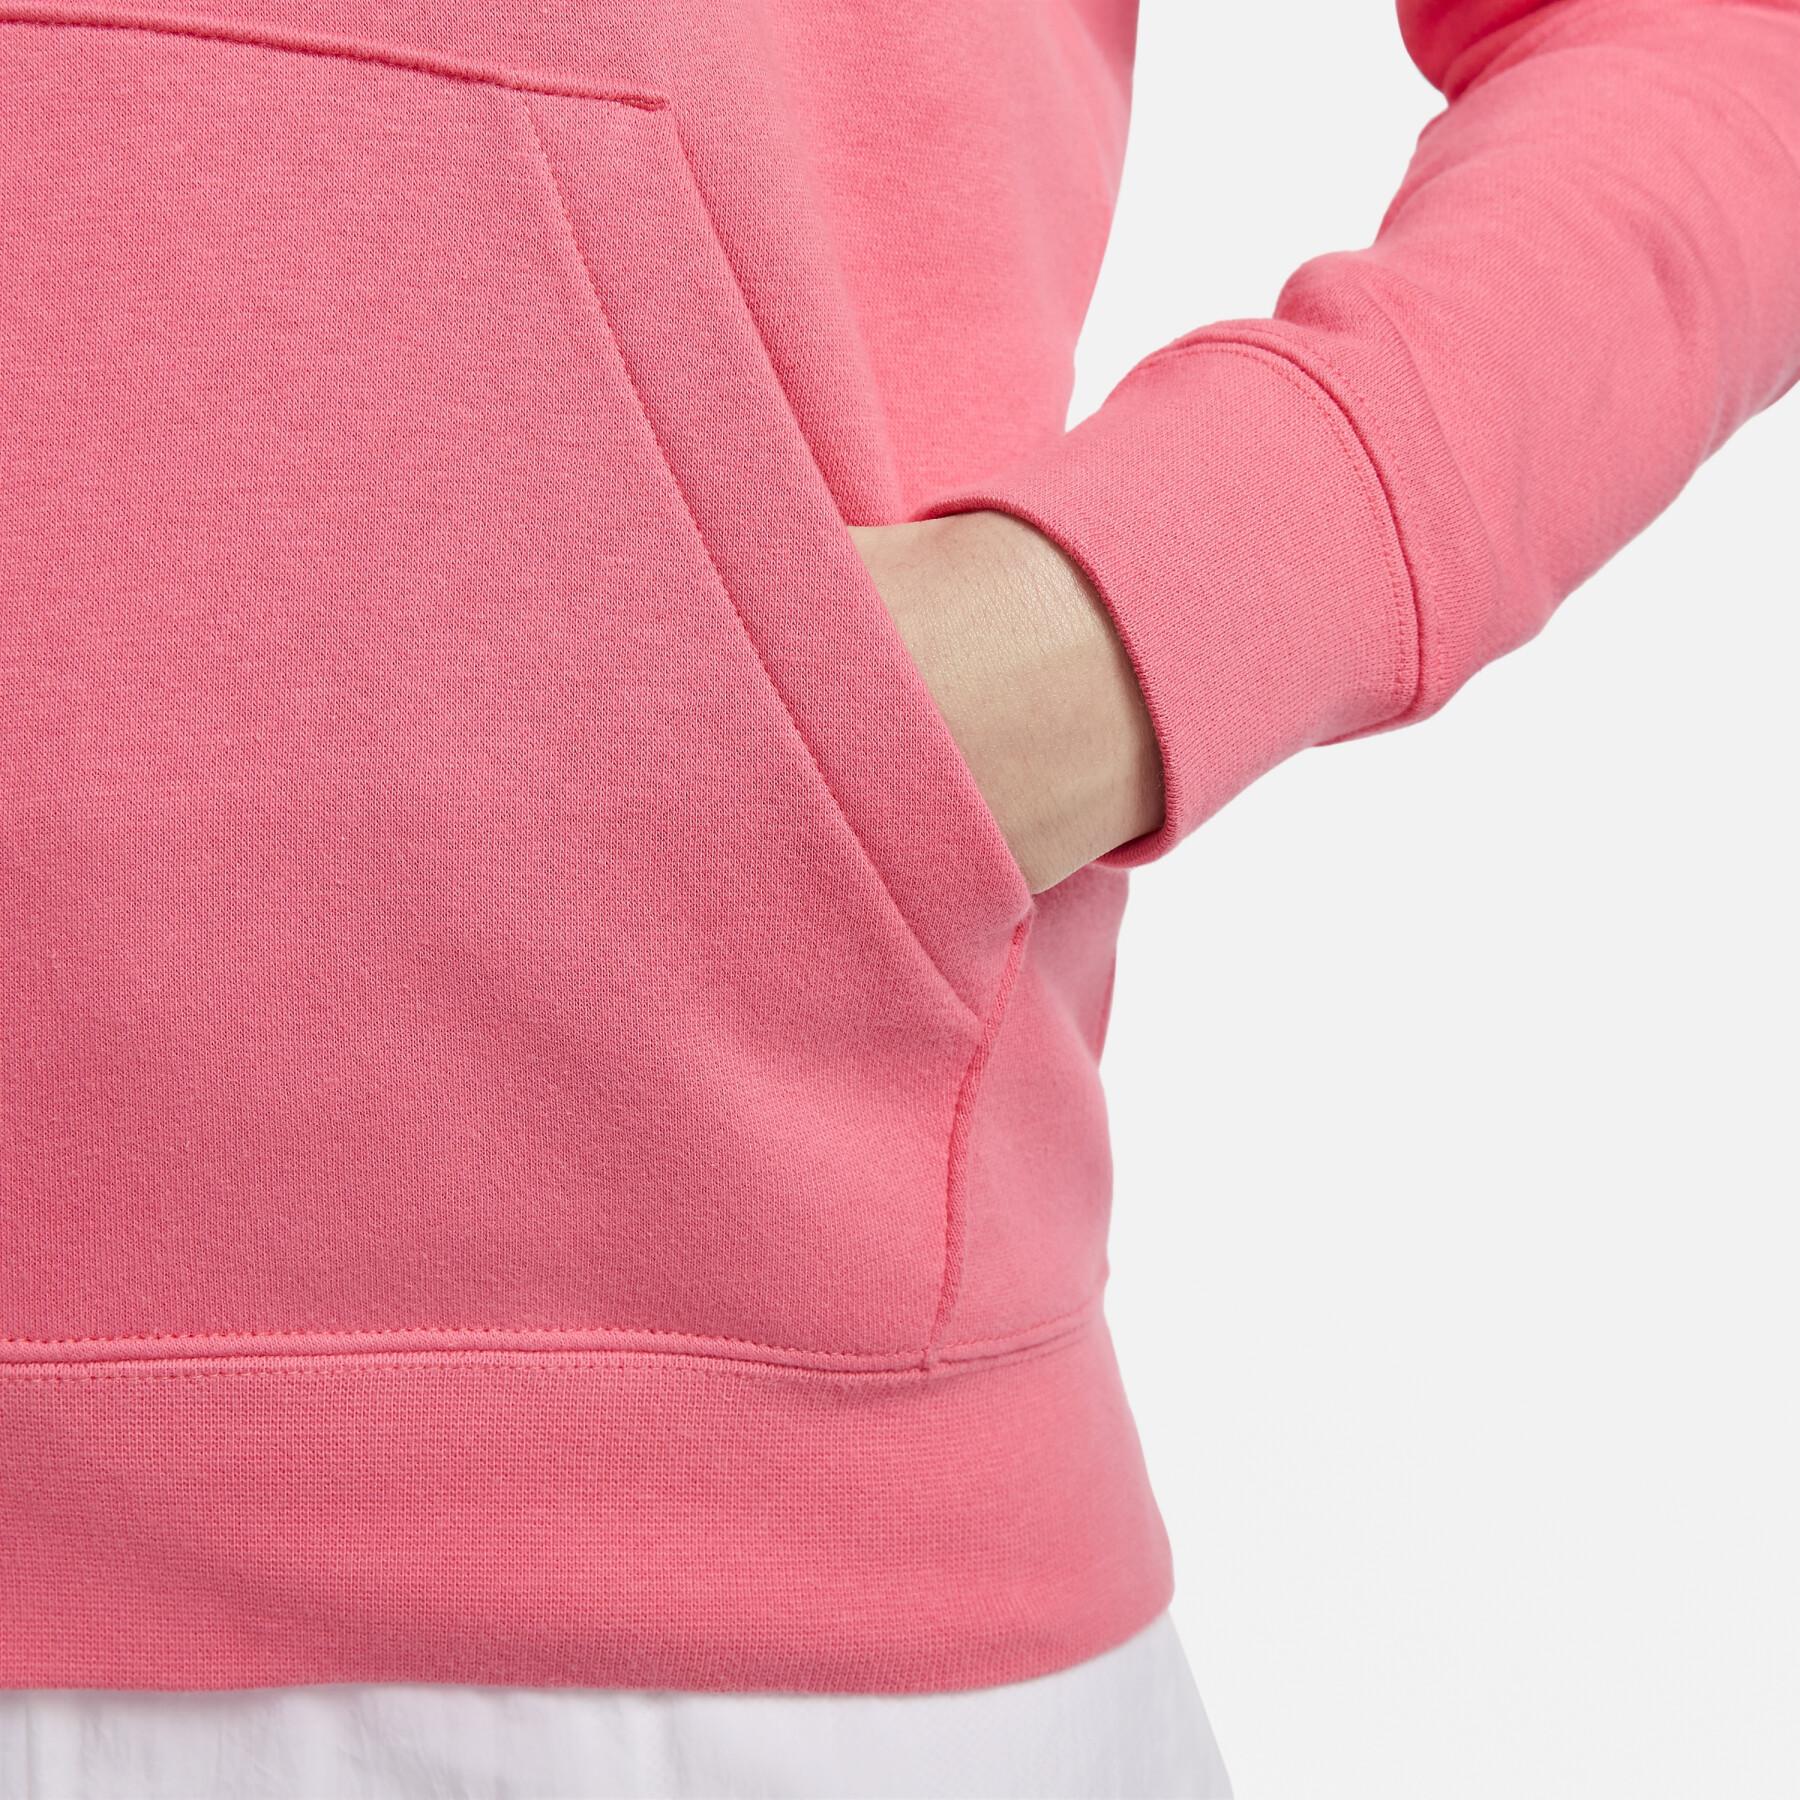 Sweatshirt à capuche femme Nike Club GX Std